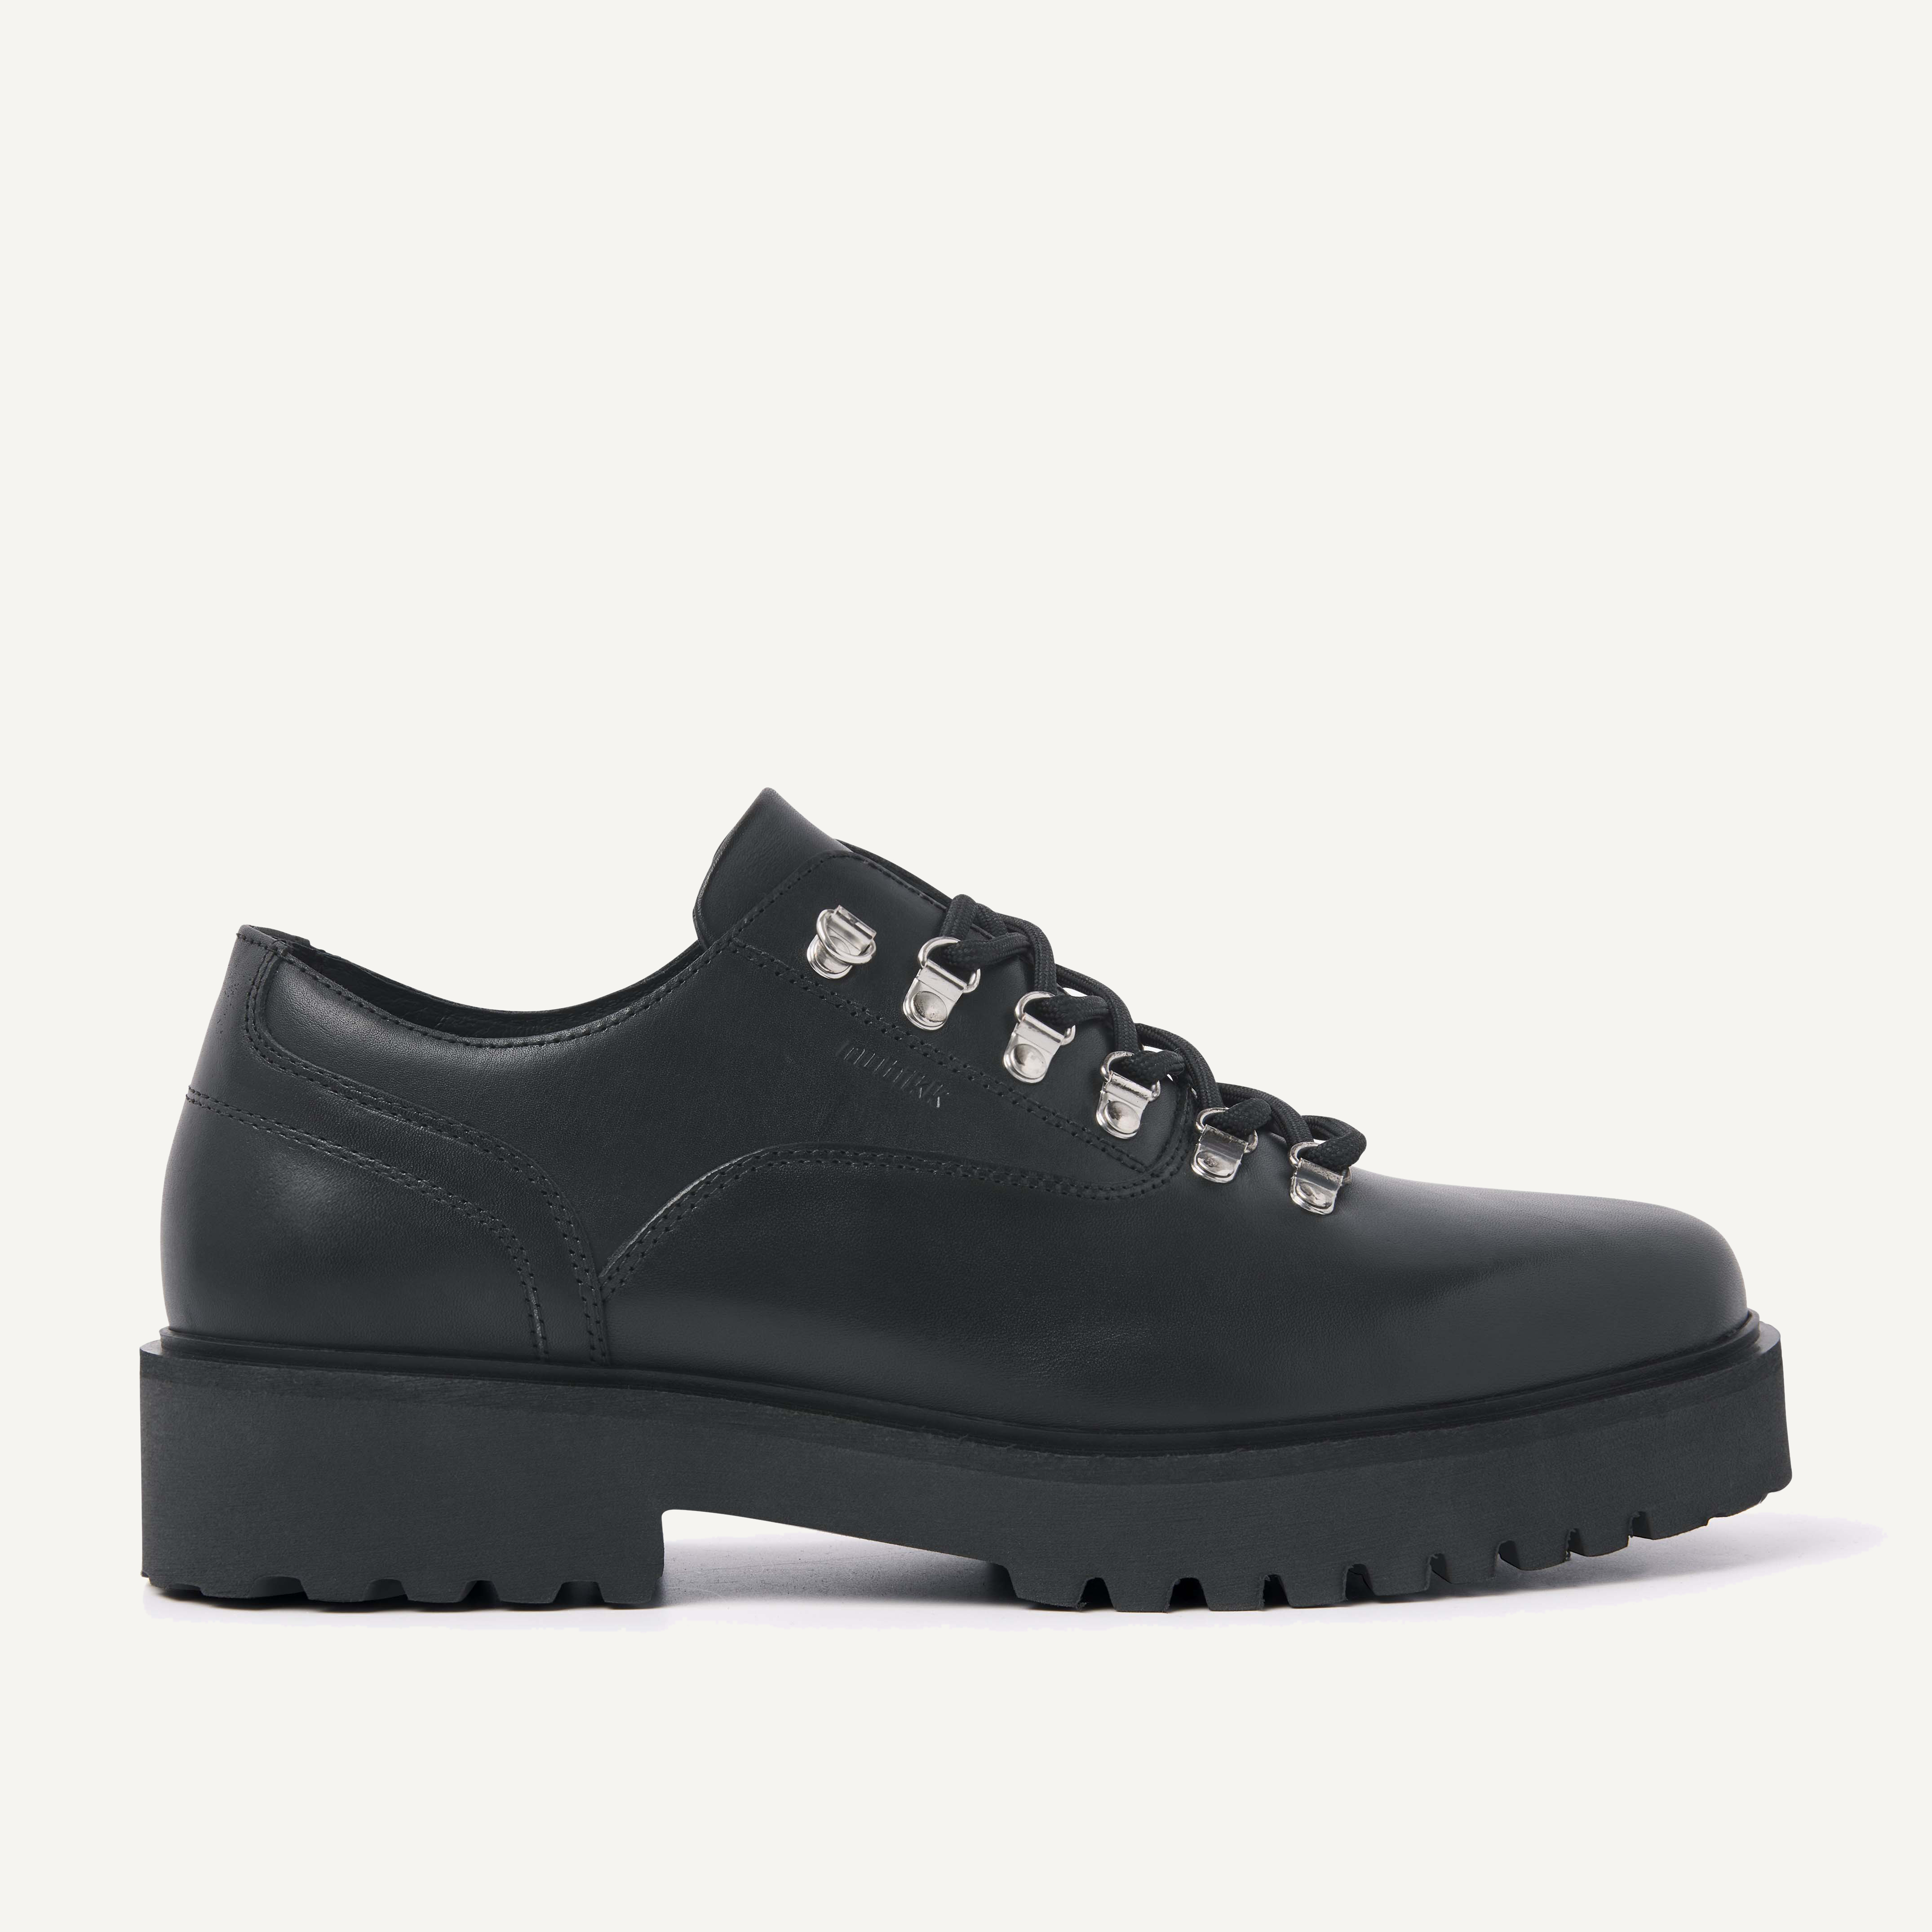 Logan Vince | Black derby shoes for men